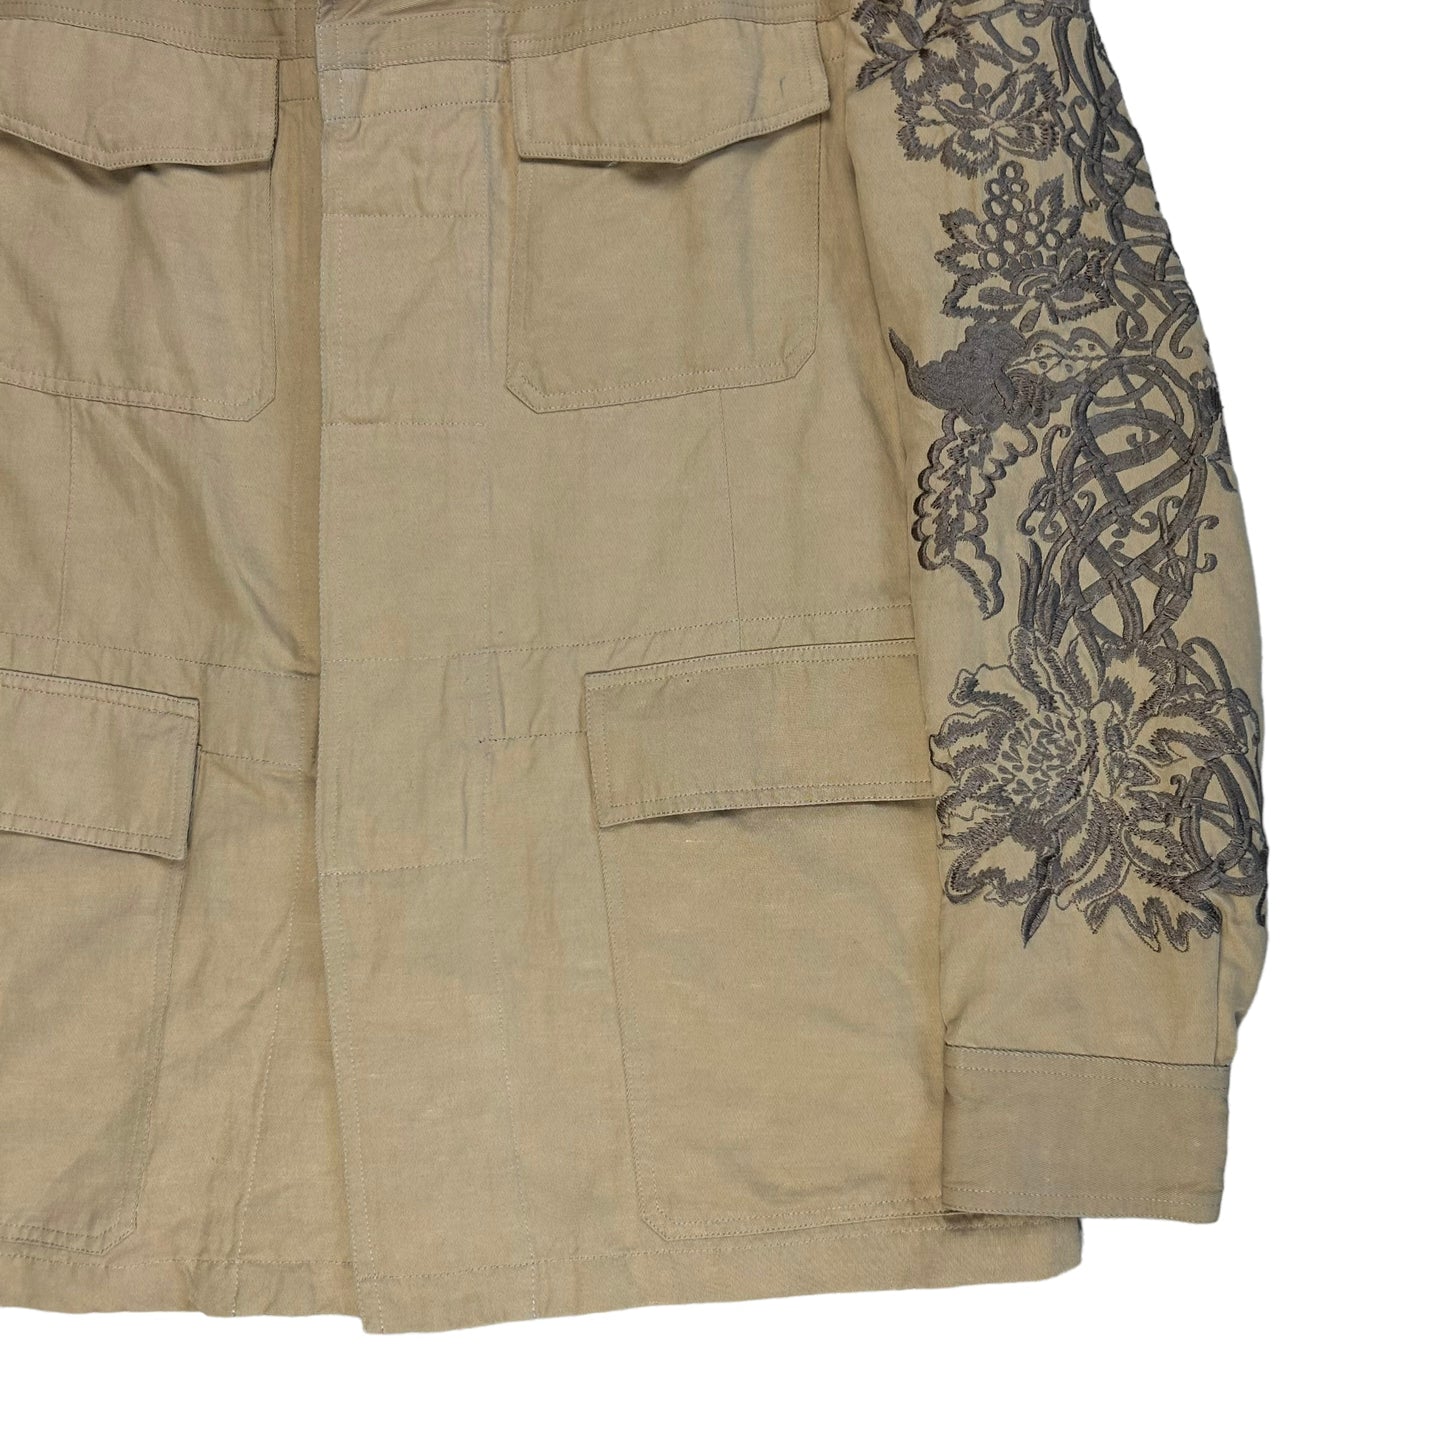 Dries Van Noten Embroidered Safari Jacket - SS18